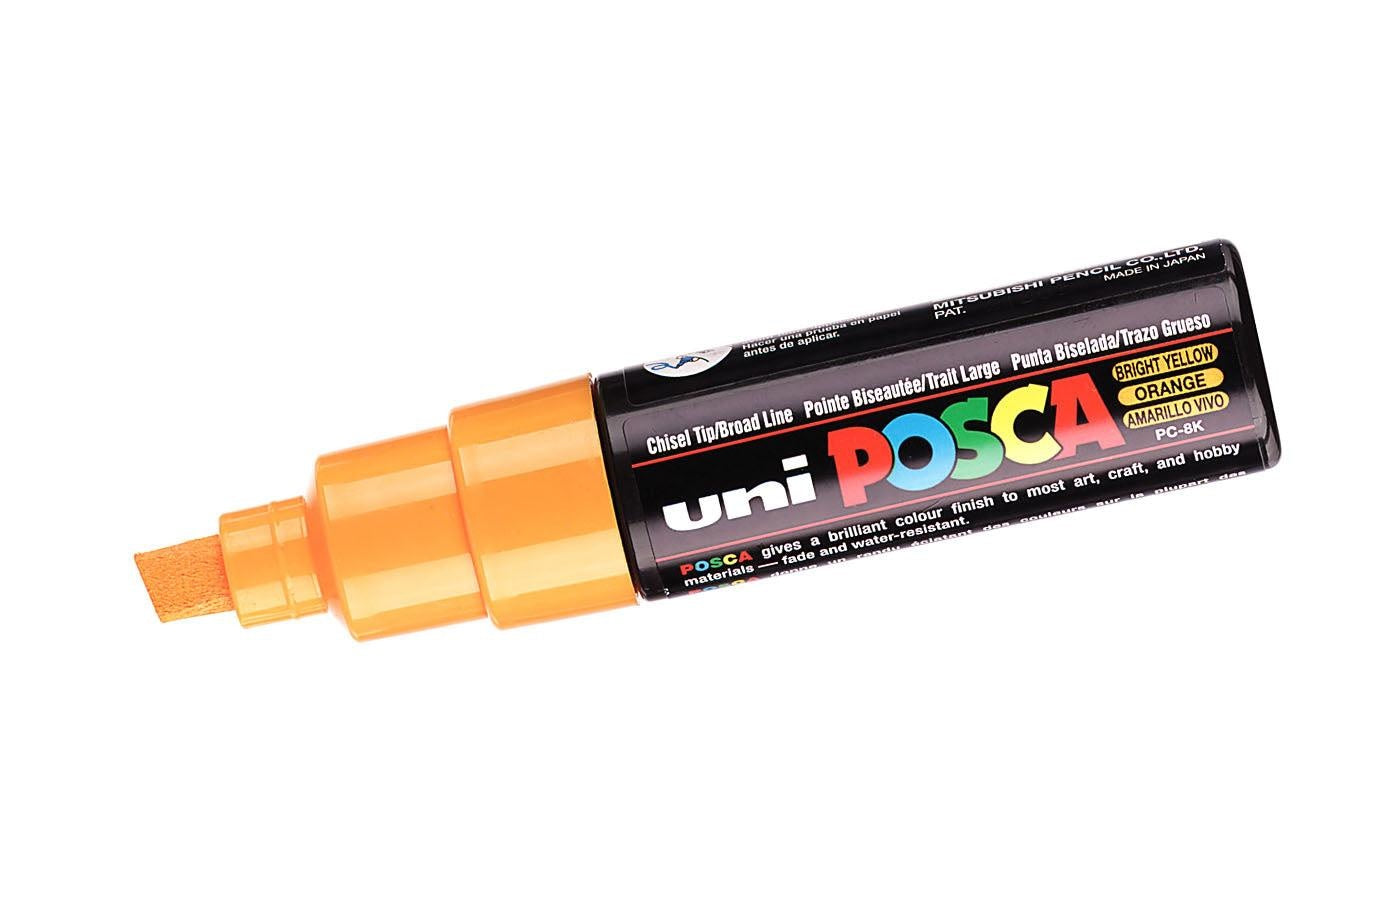 Crayon feutre acrylique Posca-Pointe Lar/Bis.(8mm) Jaune fluo - Coop Zone